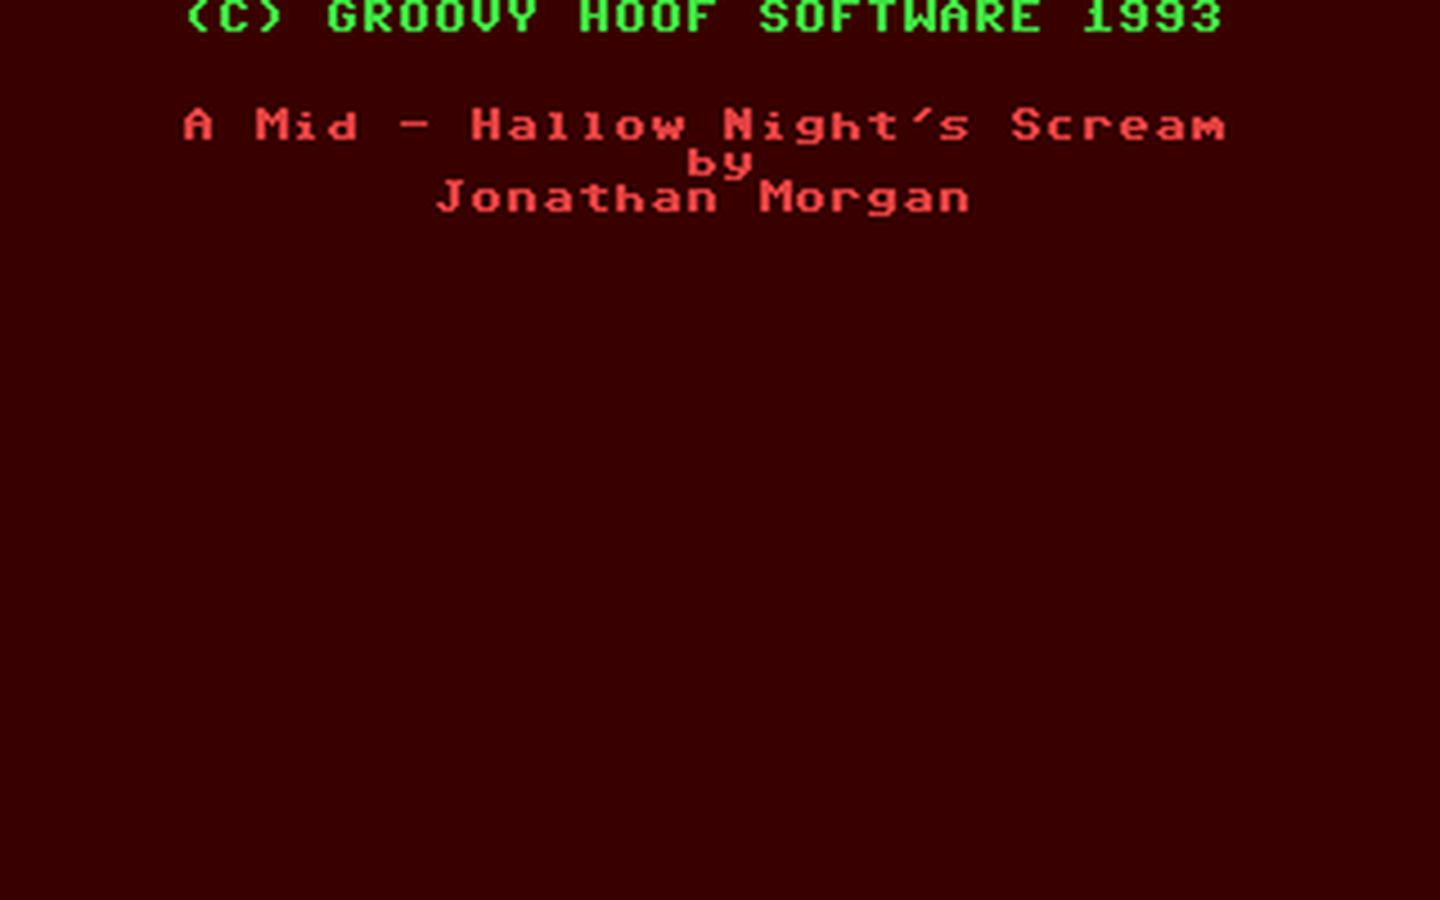 C64 GameBase Mid,_A_-_Hallow_Night's_Scream Groovy_Hoof_Software 1993